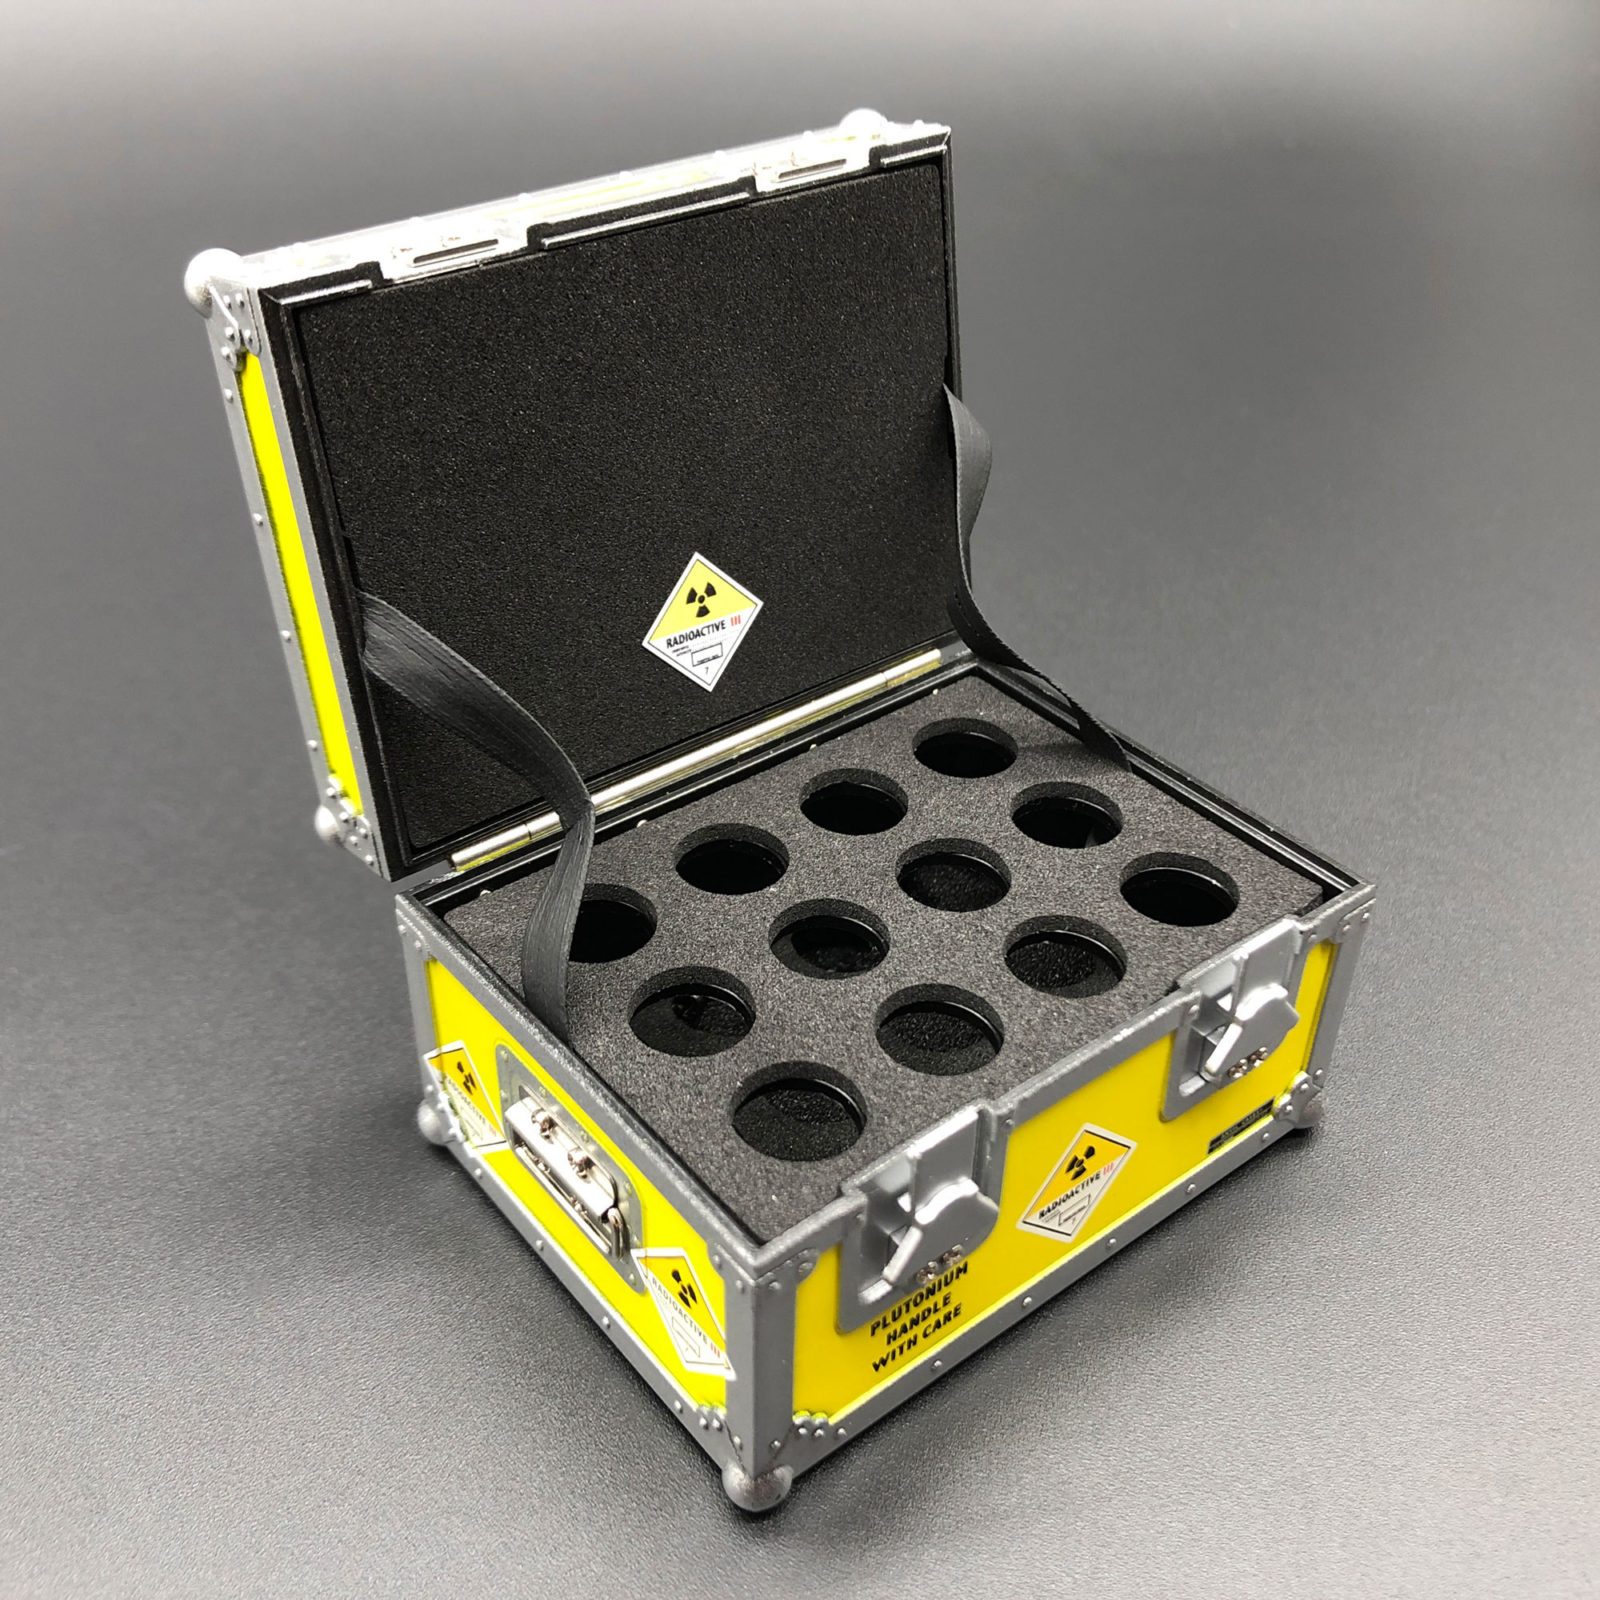 DeLorean Plutonium Case with foam inserts and stickers mods